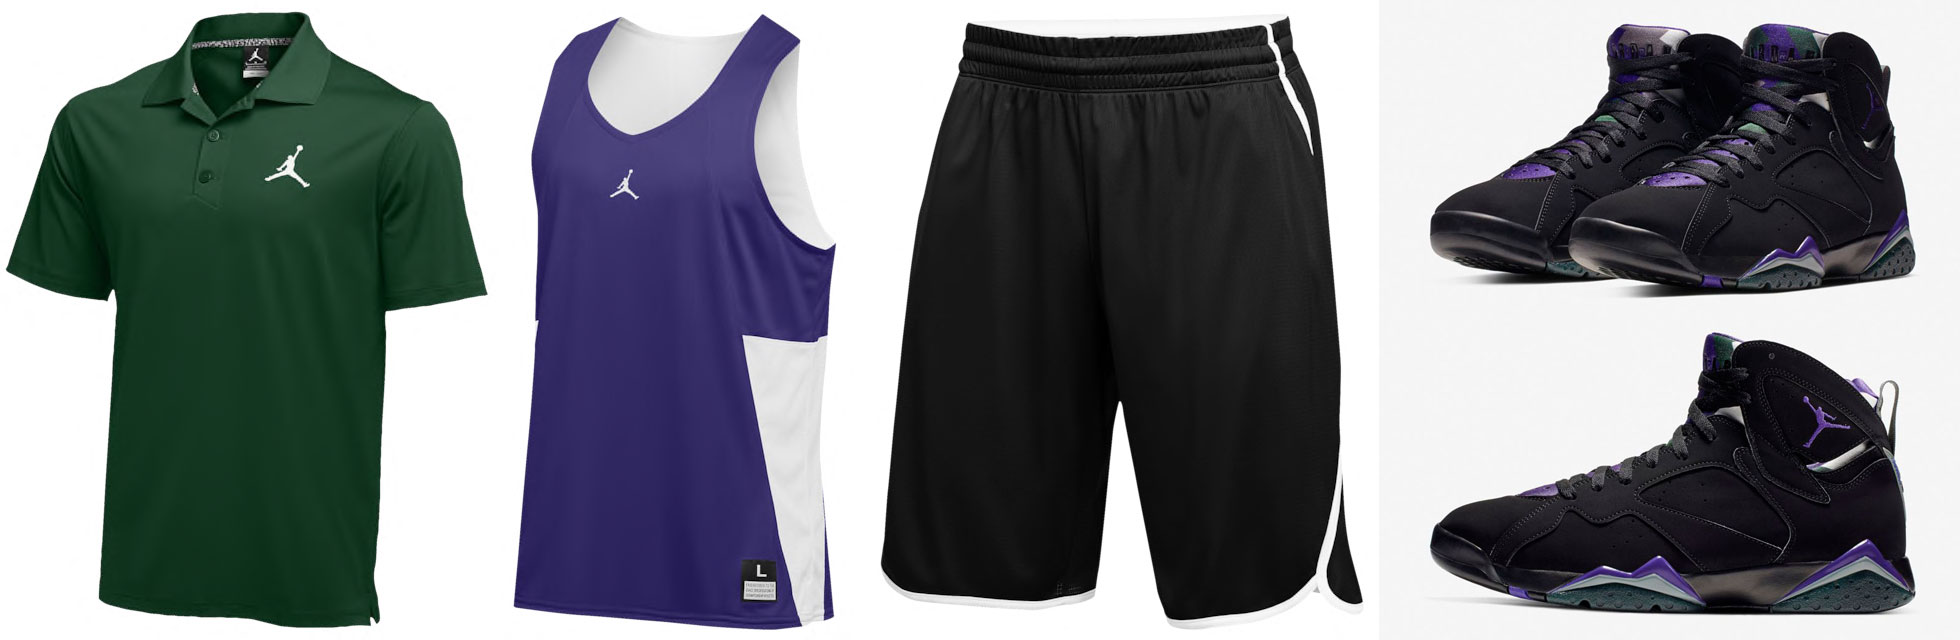 air-jordan-7-ray-allen-basketball-clothing